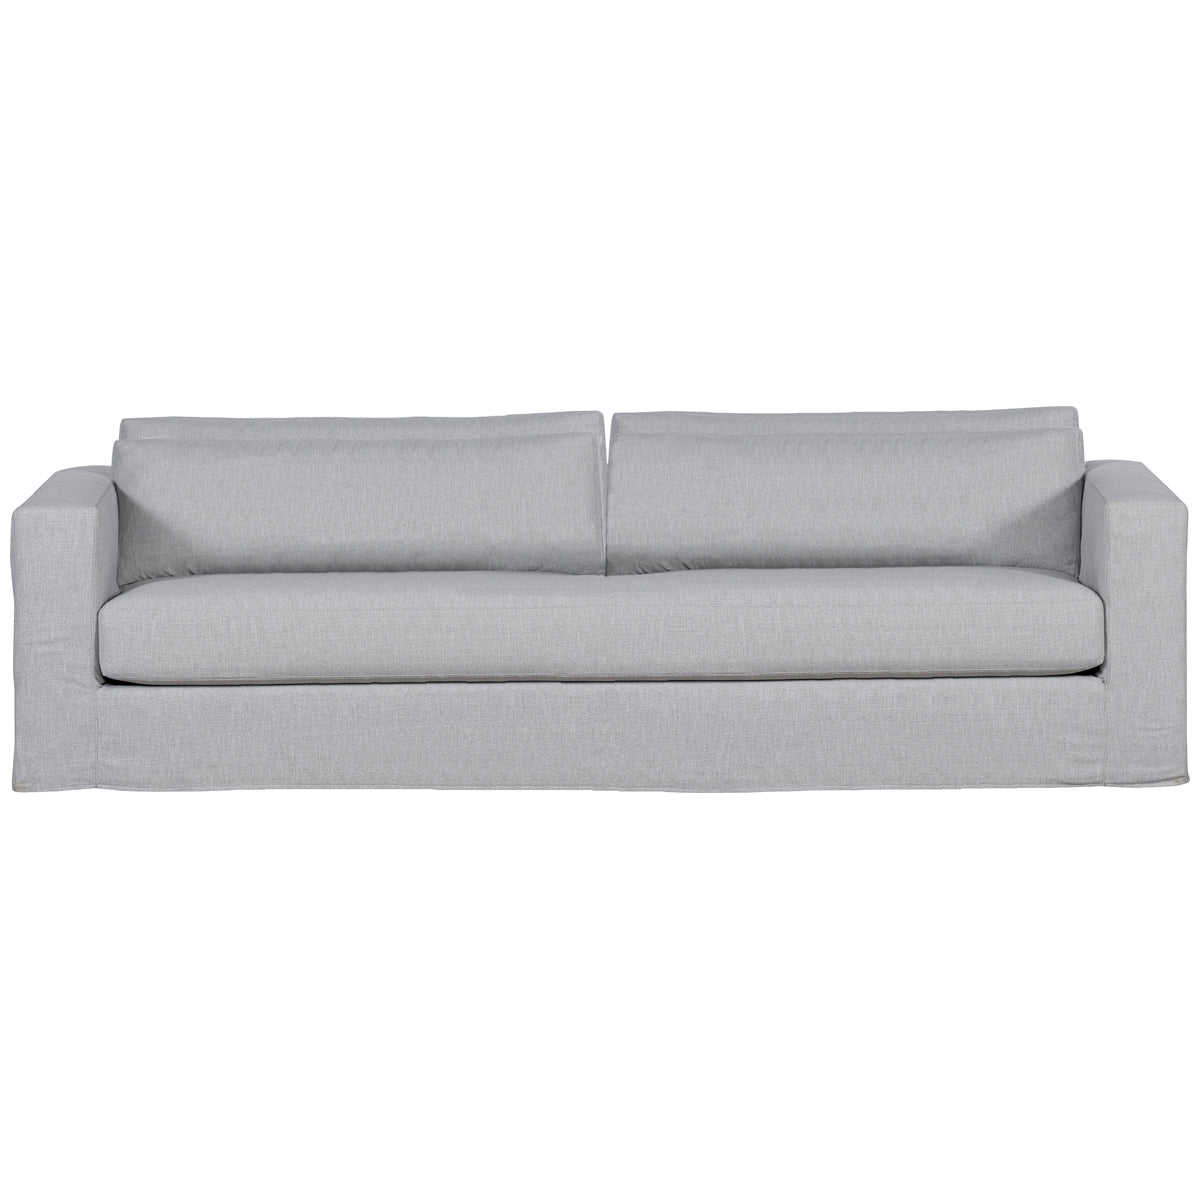 Vanguard Furniture Leone Slipcovered Muslin Bench Seat Sofa